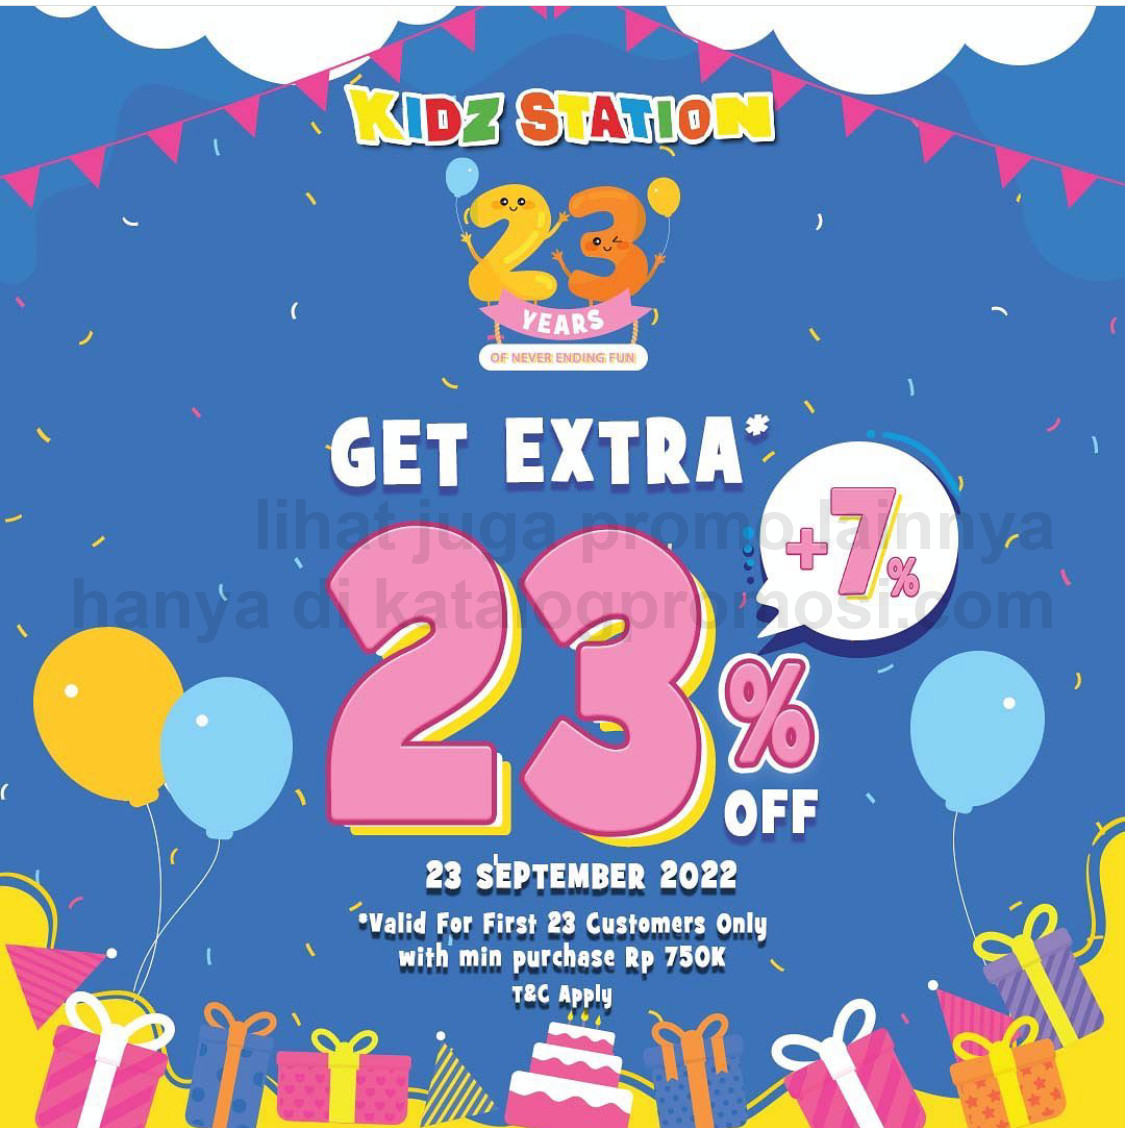 Promo KIDZ STATION 23 Anniversary! Diskon 23% off dan tambahan lagi 7% off 